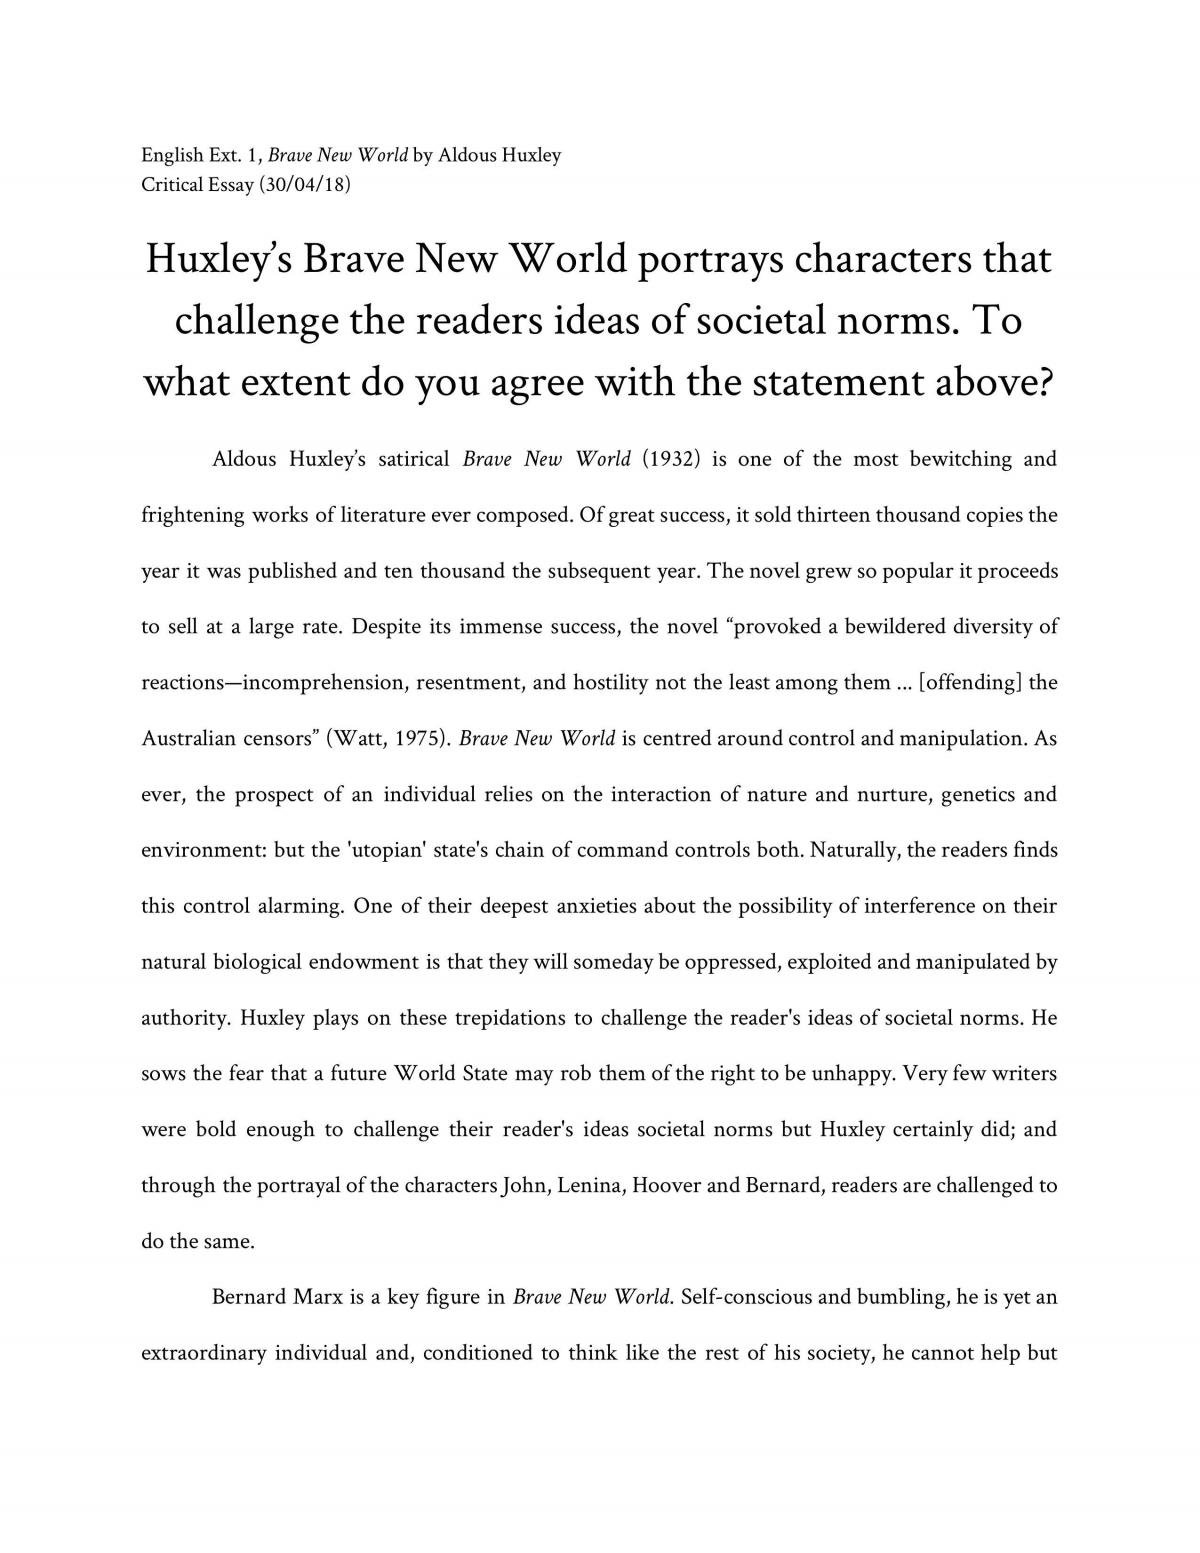 essays on brave new world